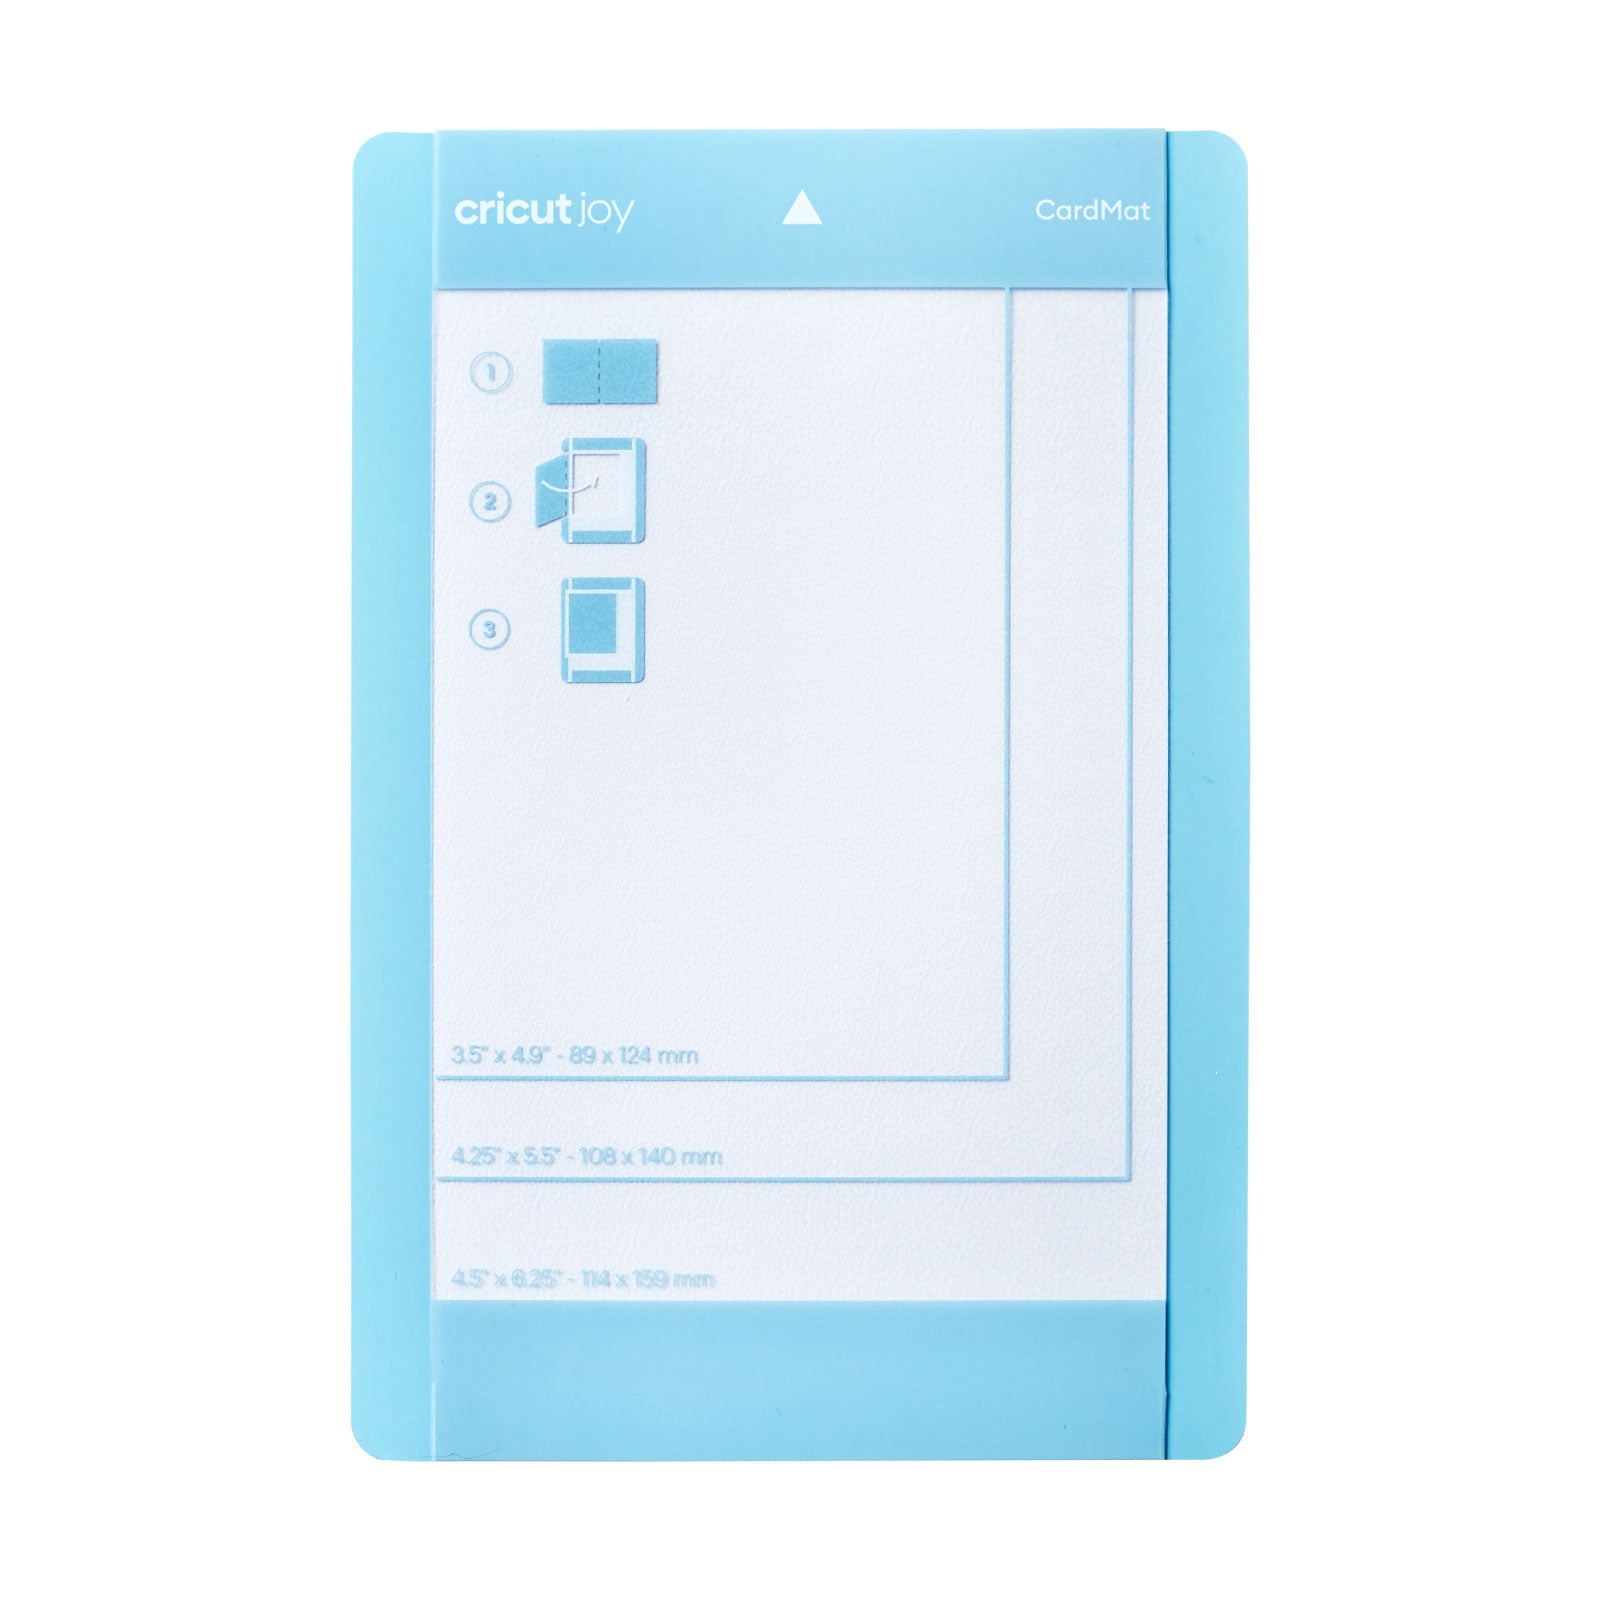 Cricut Joy Card Mat, 4.5 " x 6.25"